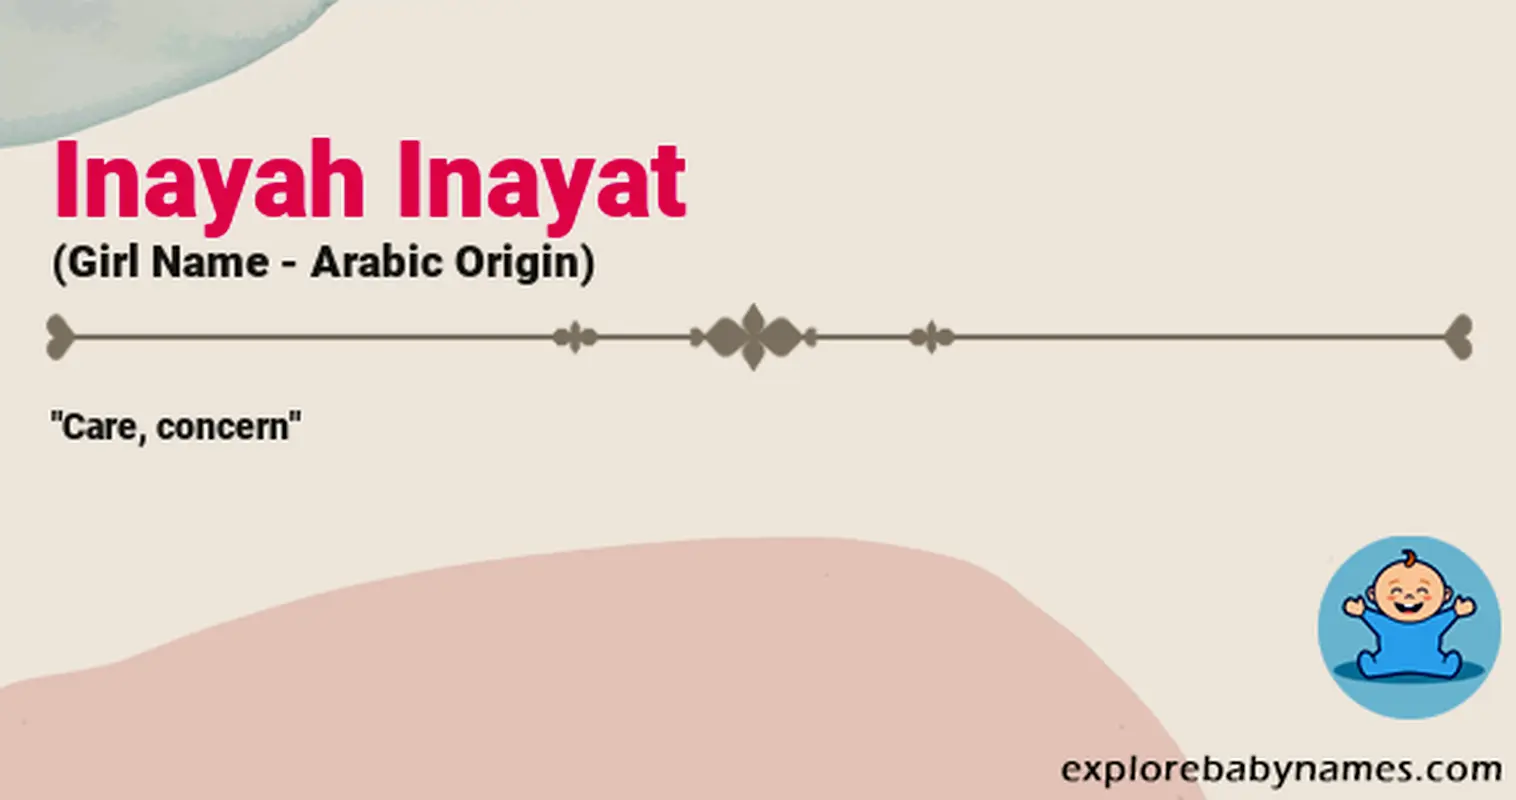 Meaning of Inayah Inayat